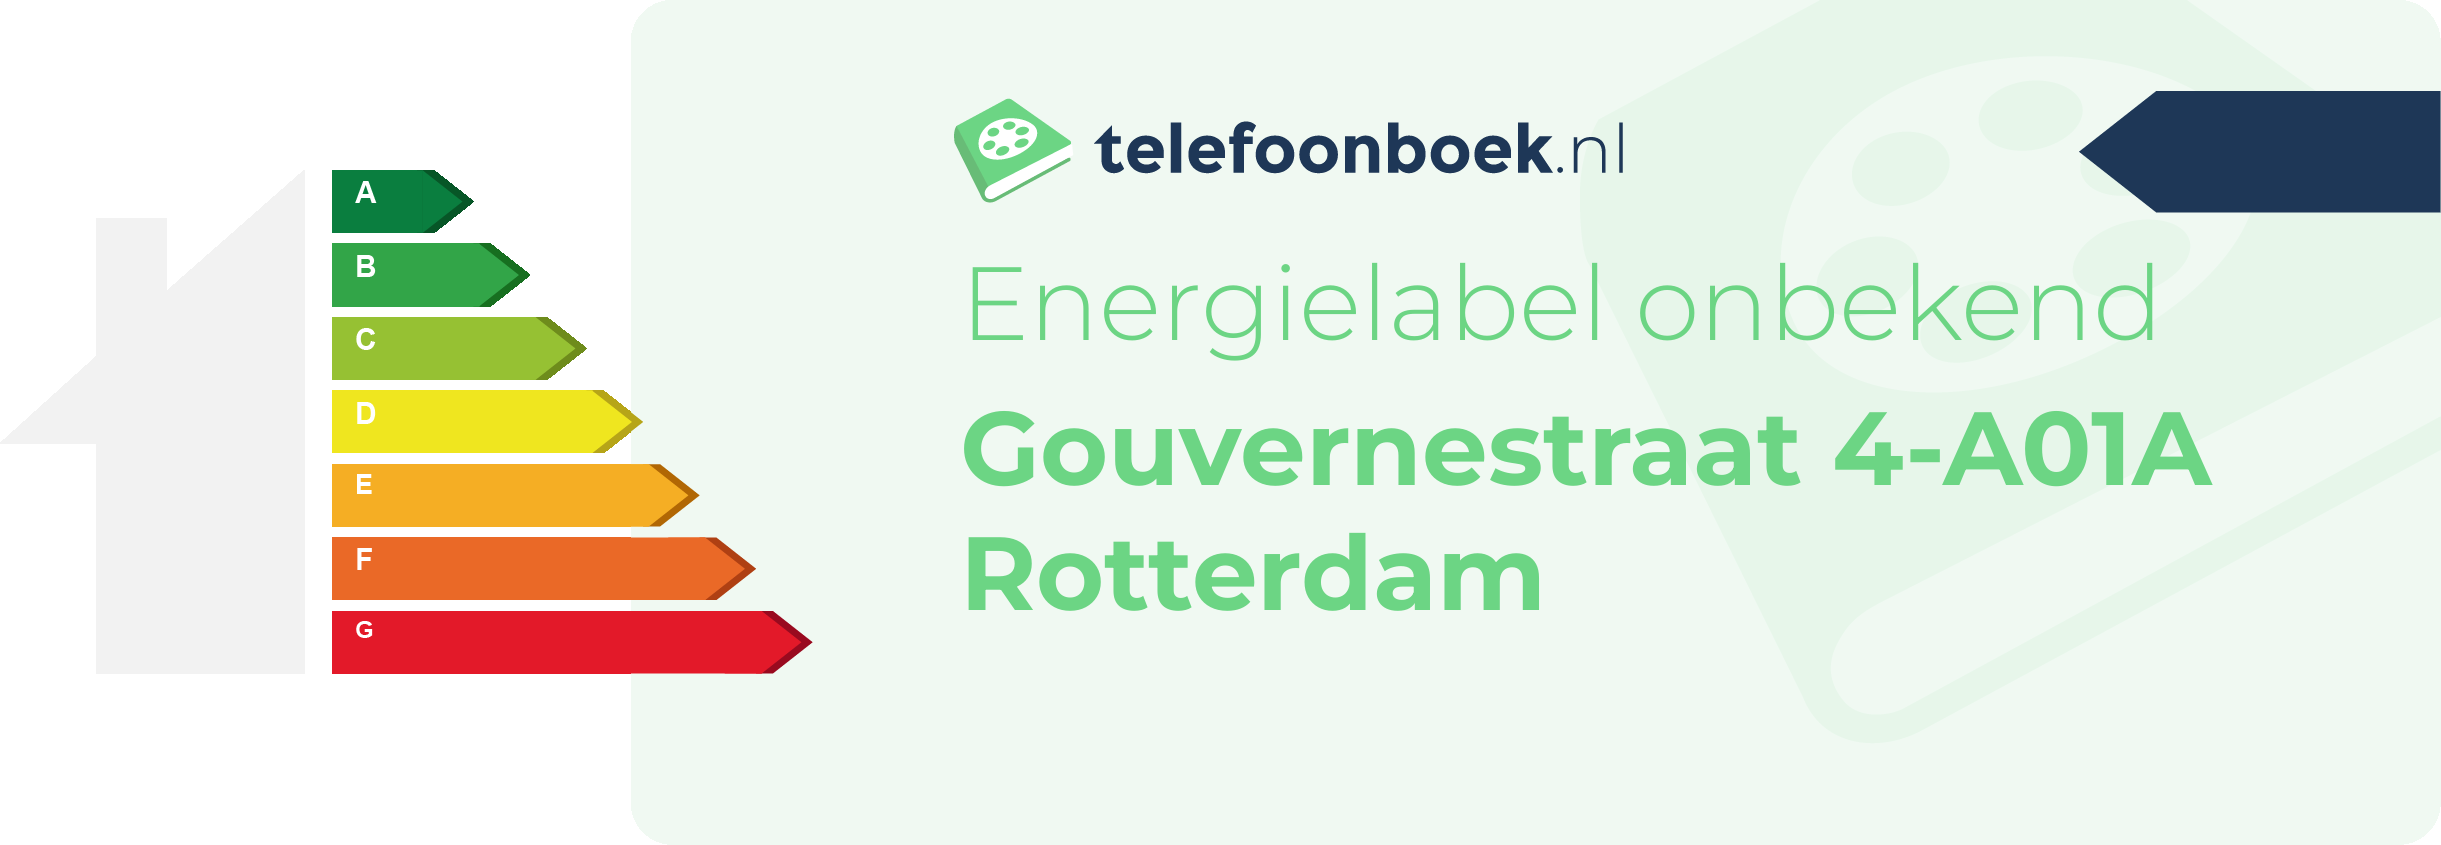 Energielabel Gouvernestraat 4-A01A Rotterdam